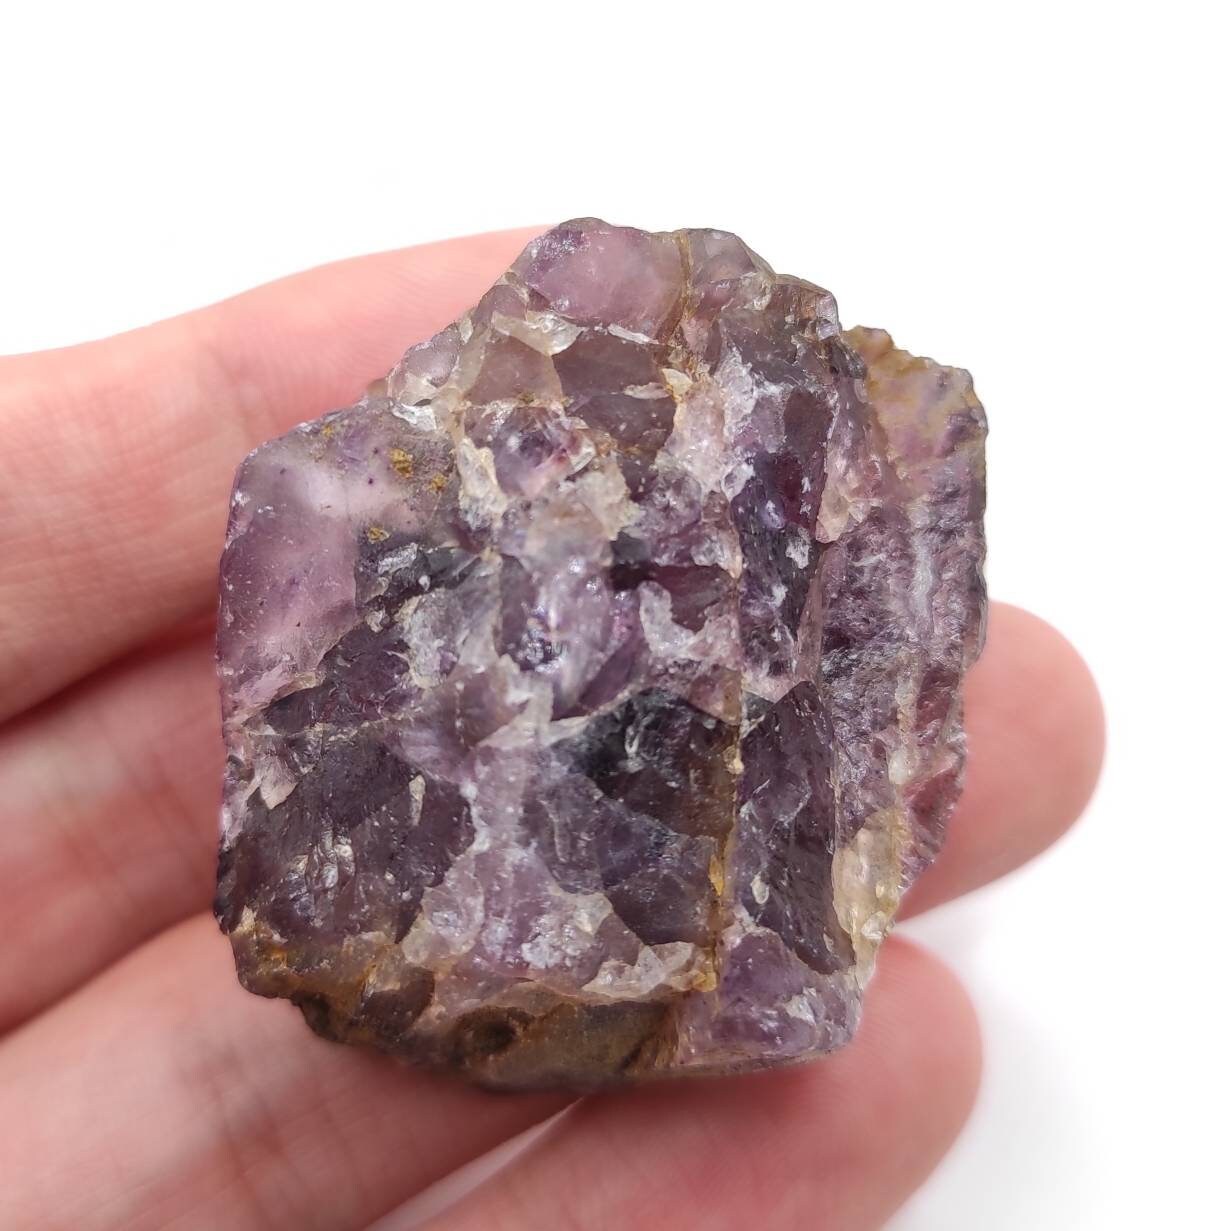 48g Purple Fluorite from Harcourt, Ontario - Canadian Fluorite Specimen - Natural Raw Purple Fluorite Mineral - Schickler Mine Occurence